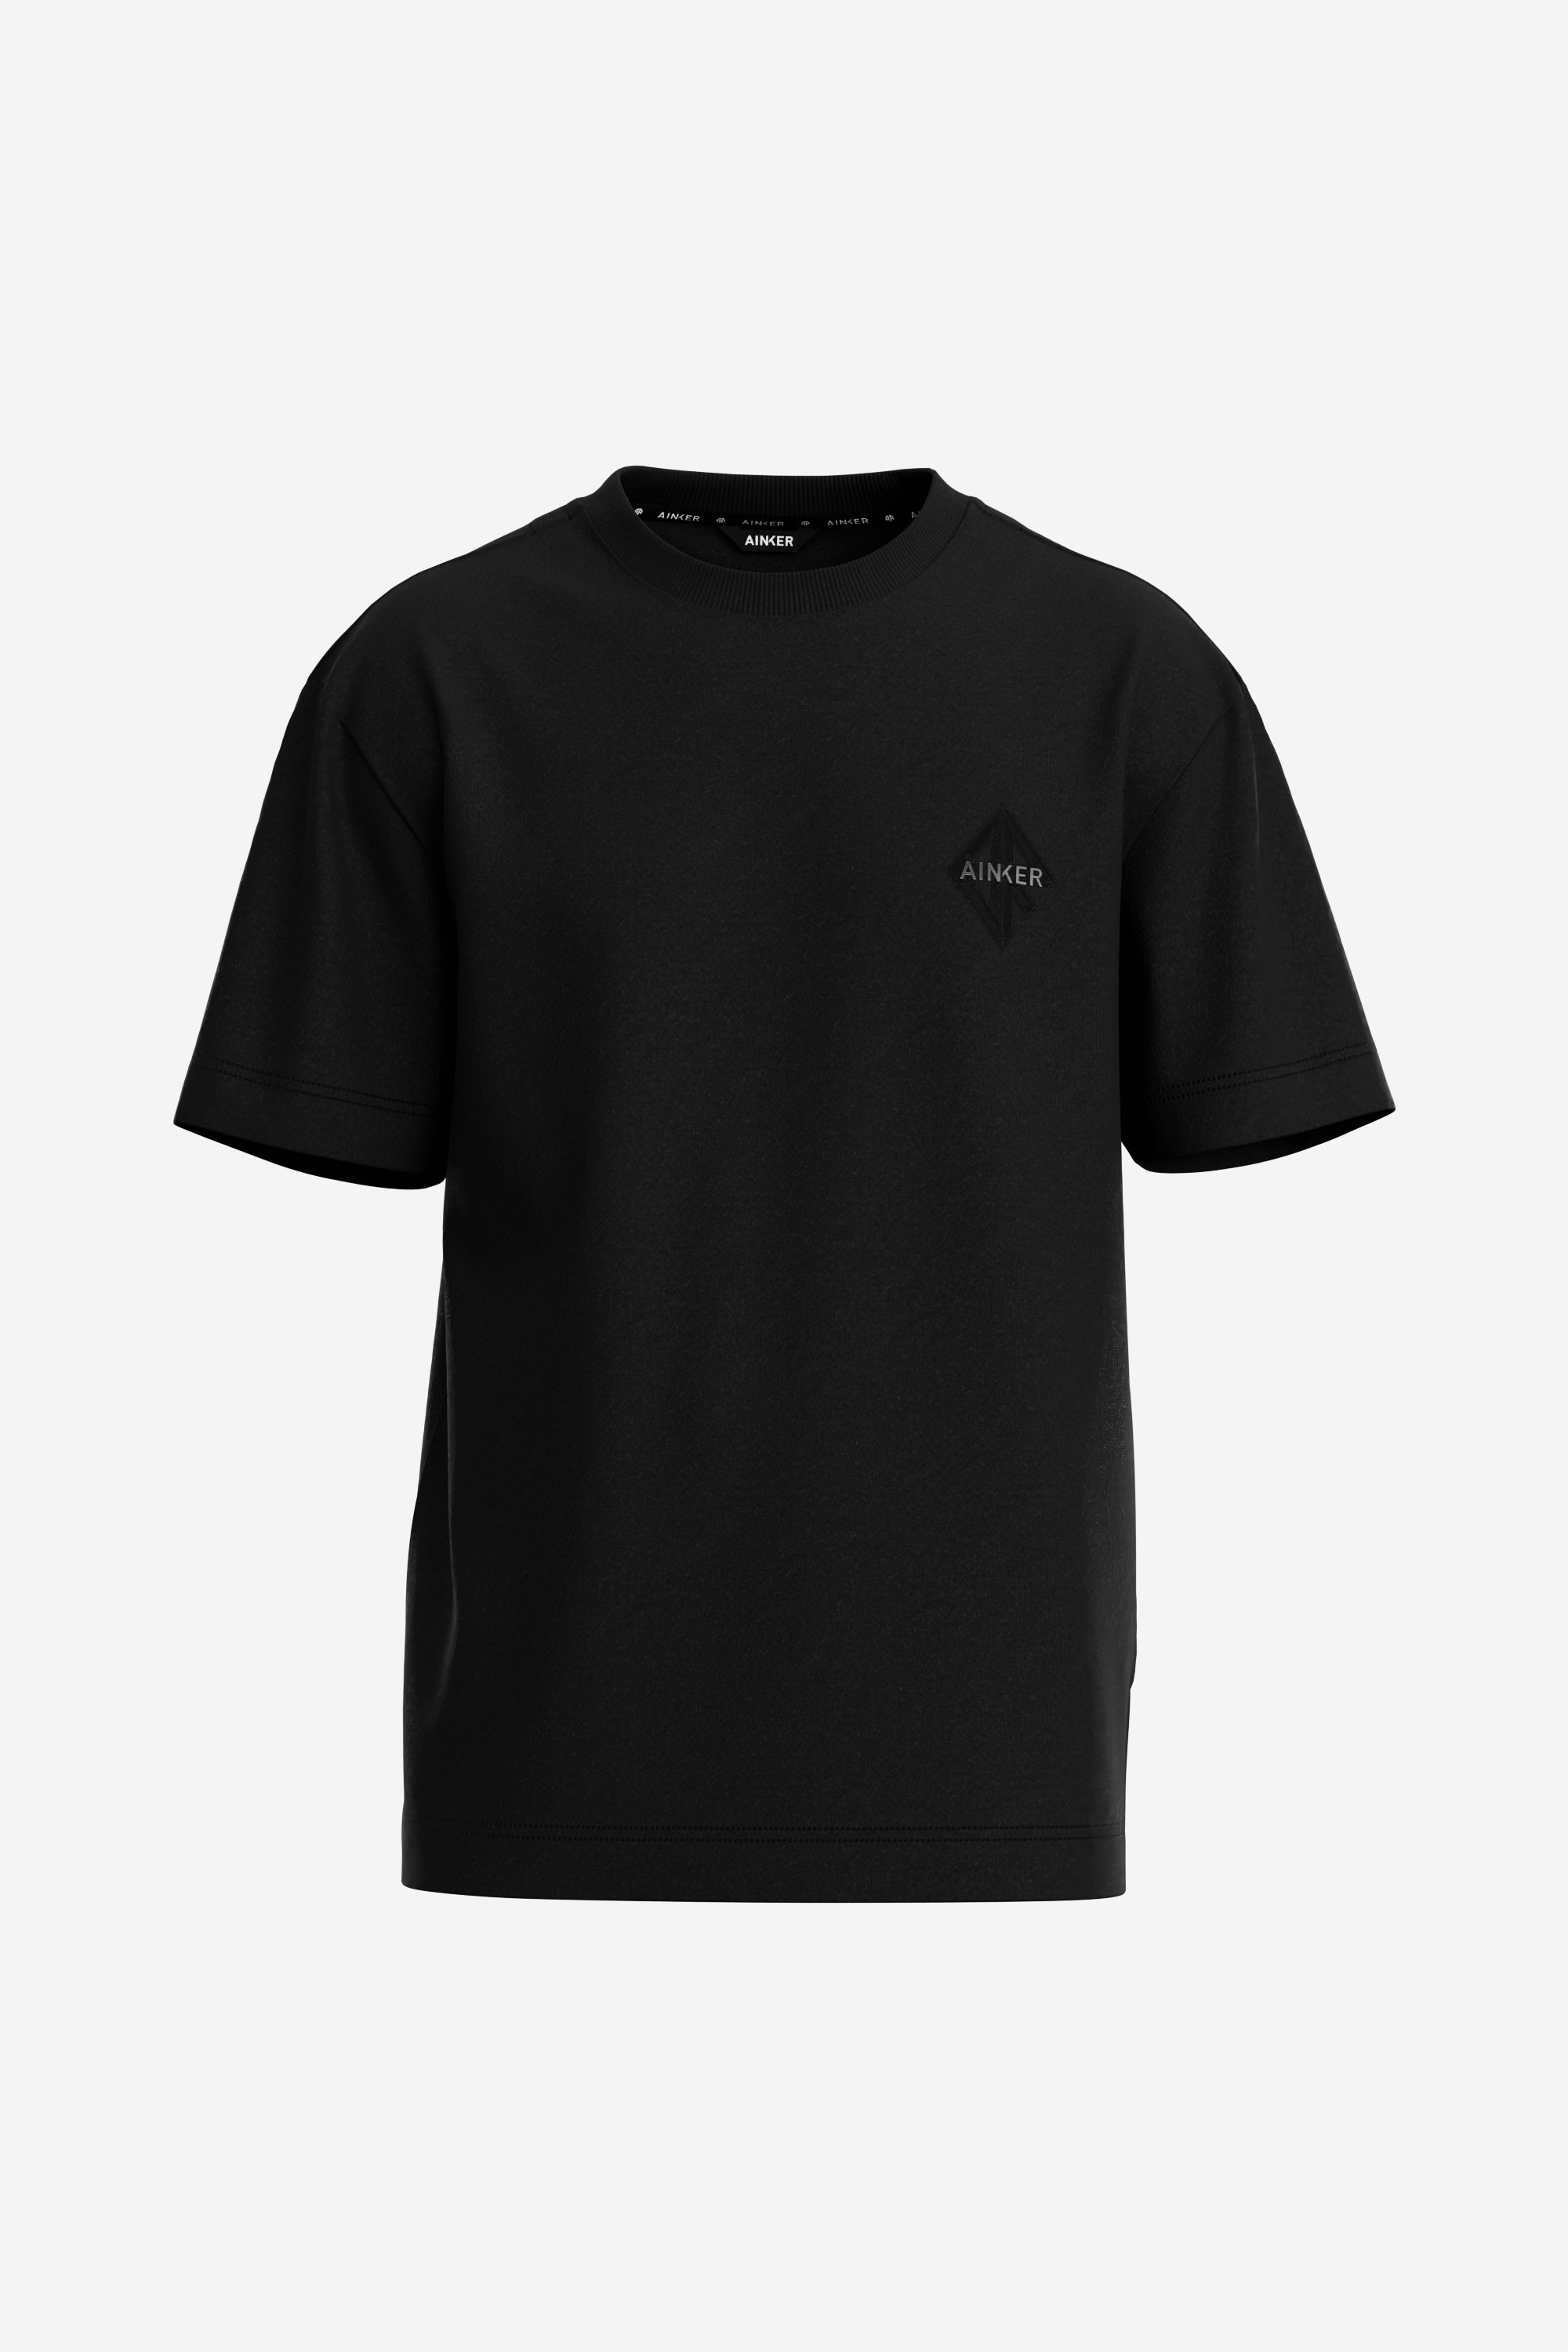 Metal Black Mercerize T-Shirt